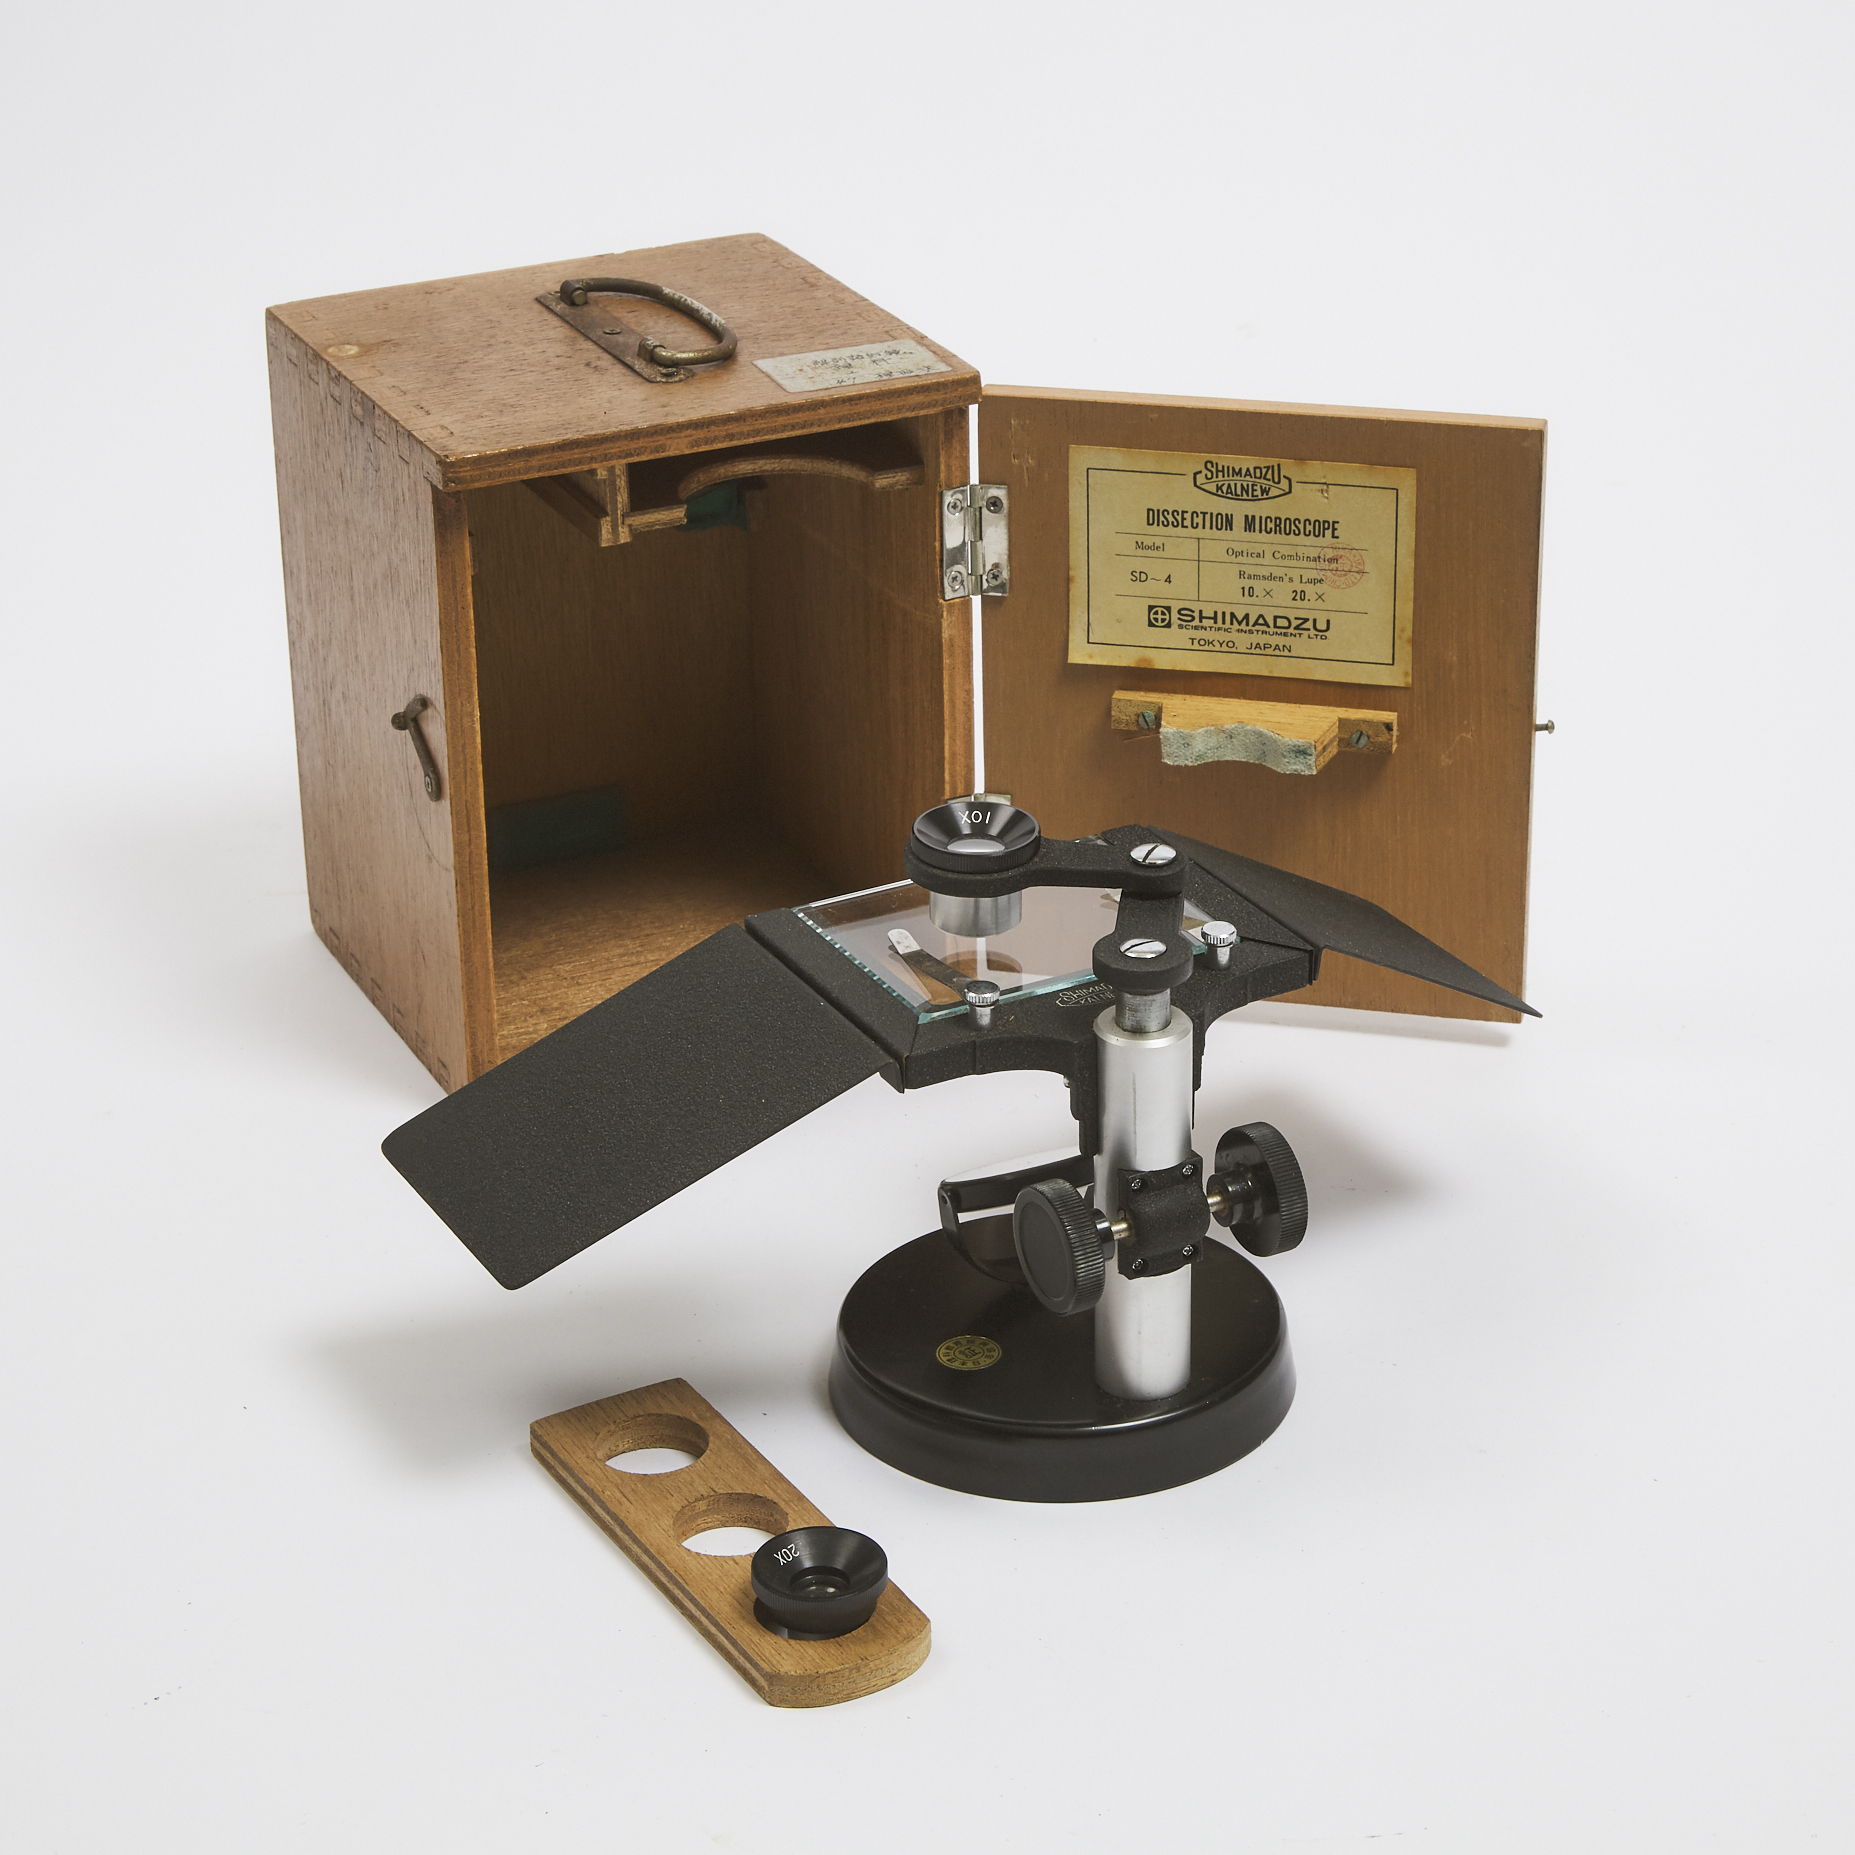 Japanese Dissecting Microscope, Shimadzu Scientific Instrument Ltd., Tokyo, mid 20th century